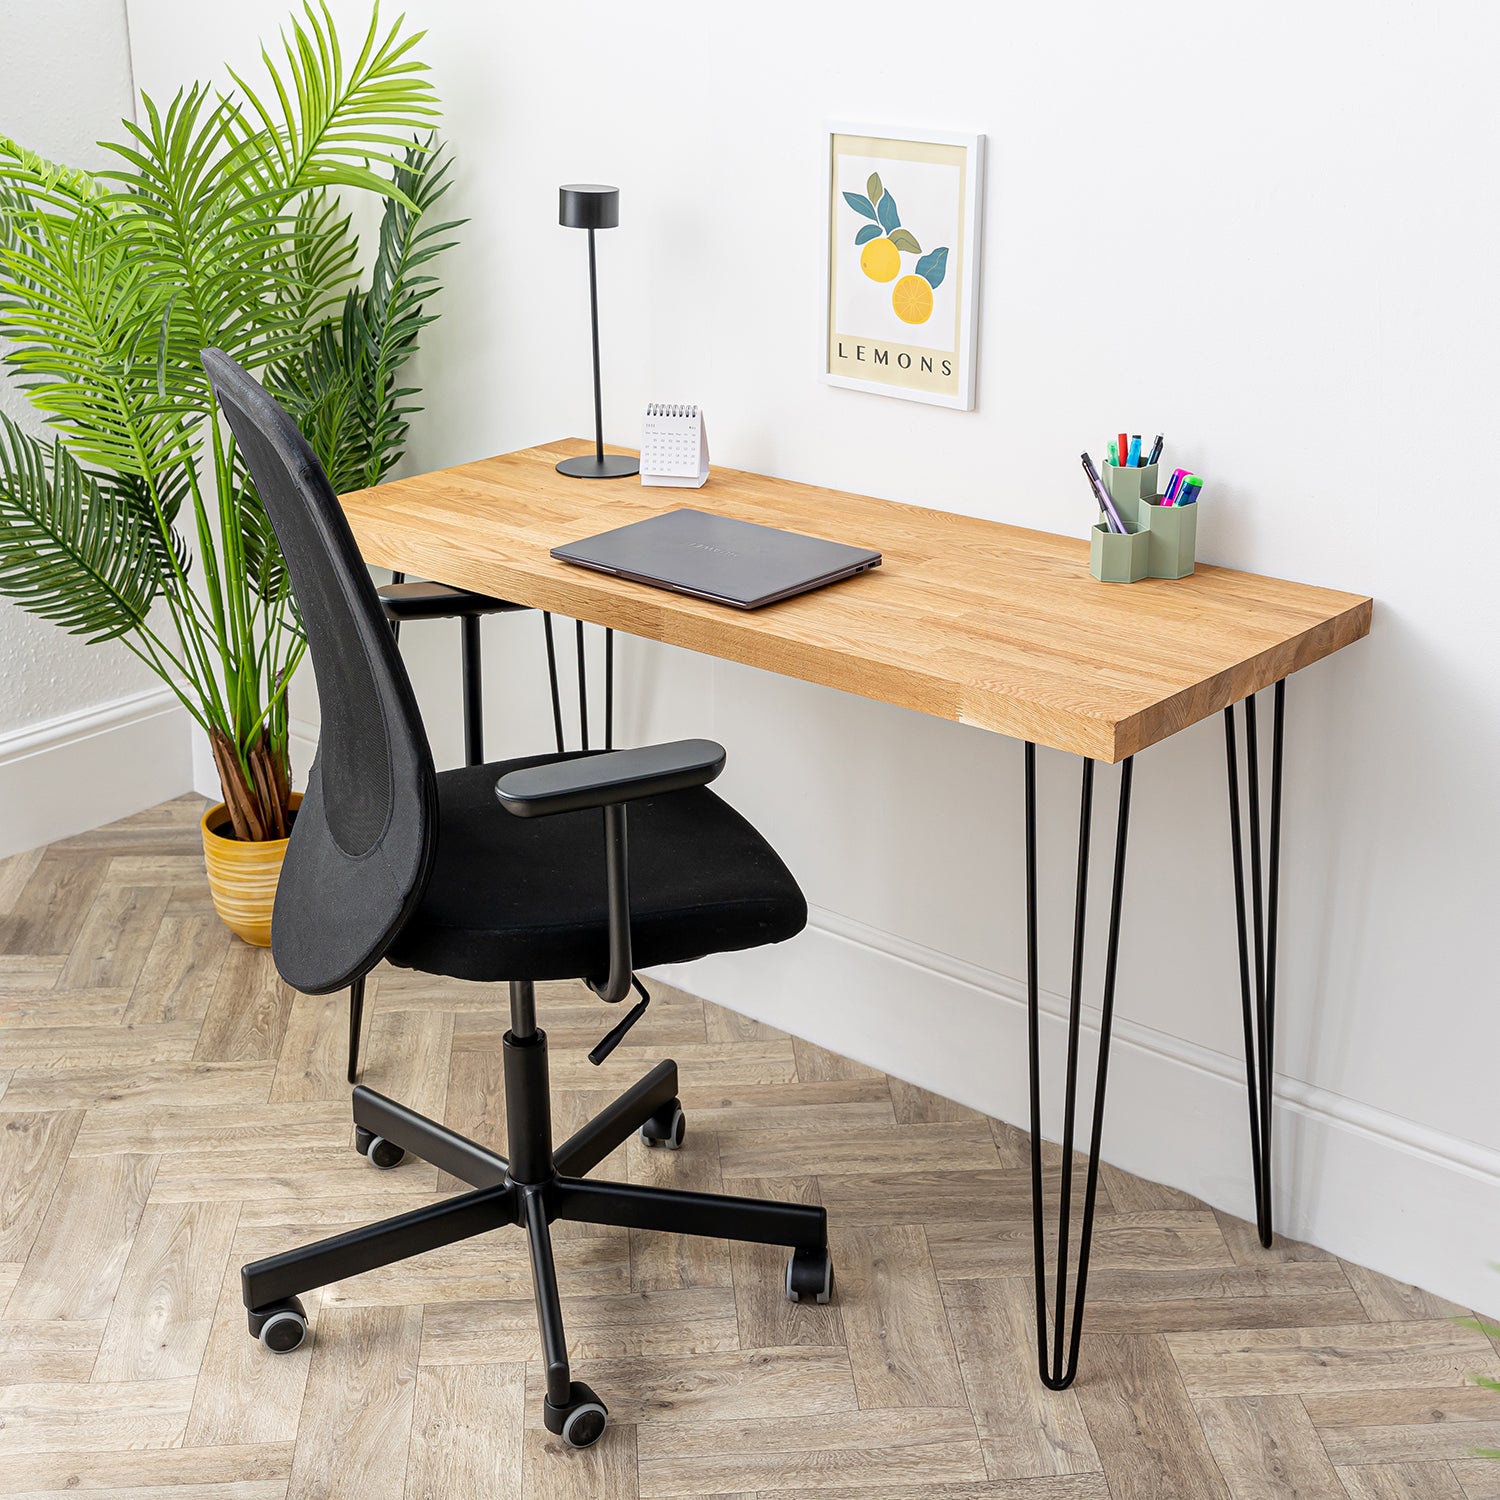 Oak Solid Wood Desk with Black Hairpin Legs - 40mm thick desktop